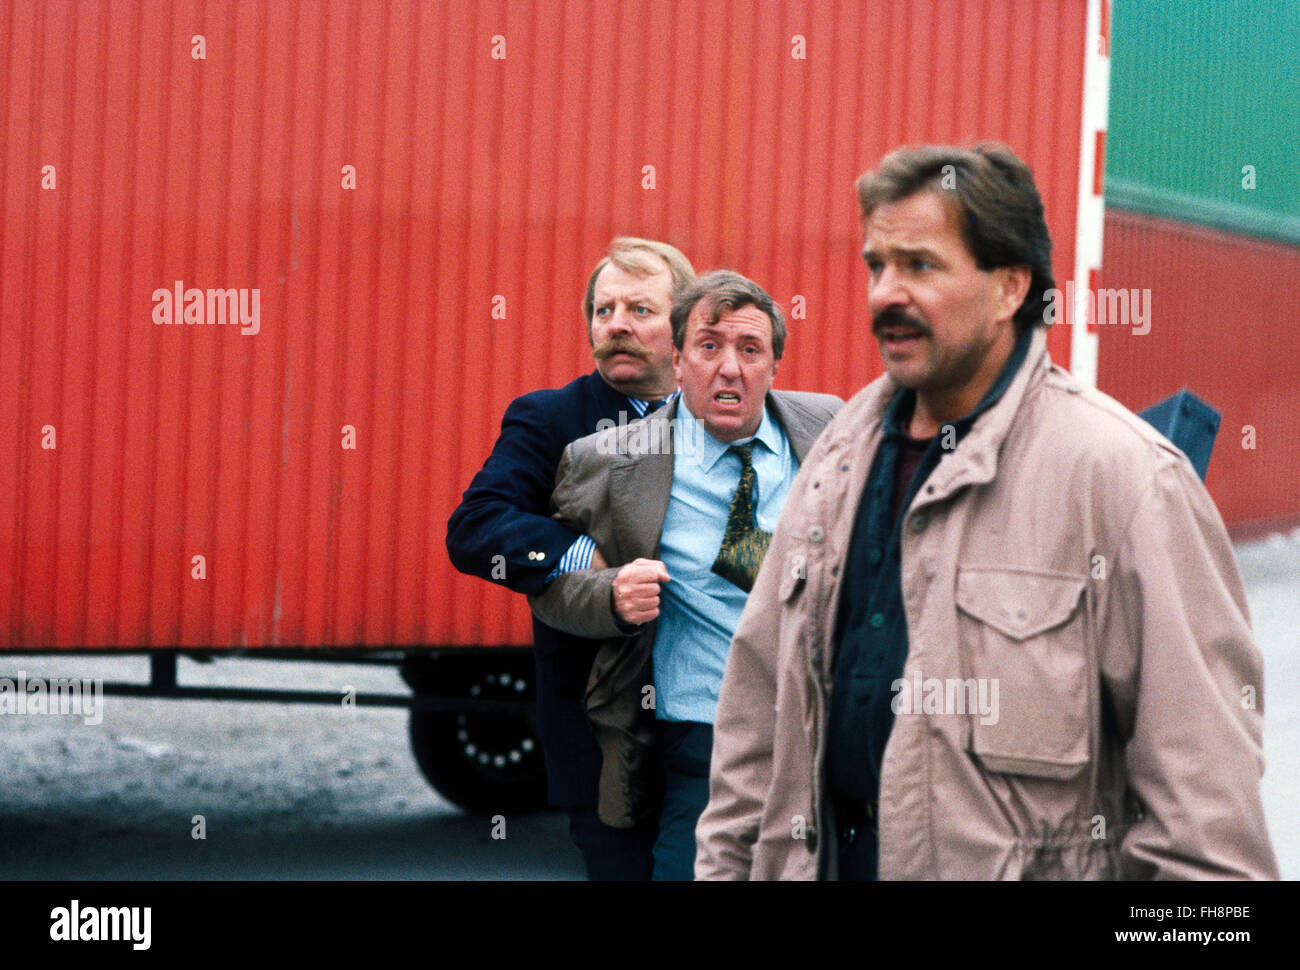 Serie TV " Tatort', episodio "Blutspur', DEU 1989, direttore: Werner Masten, scena con: Eberhard Feik, Vadim Glowna, Götz George, a terze parti Permissions-Neccessary Foto Stock